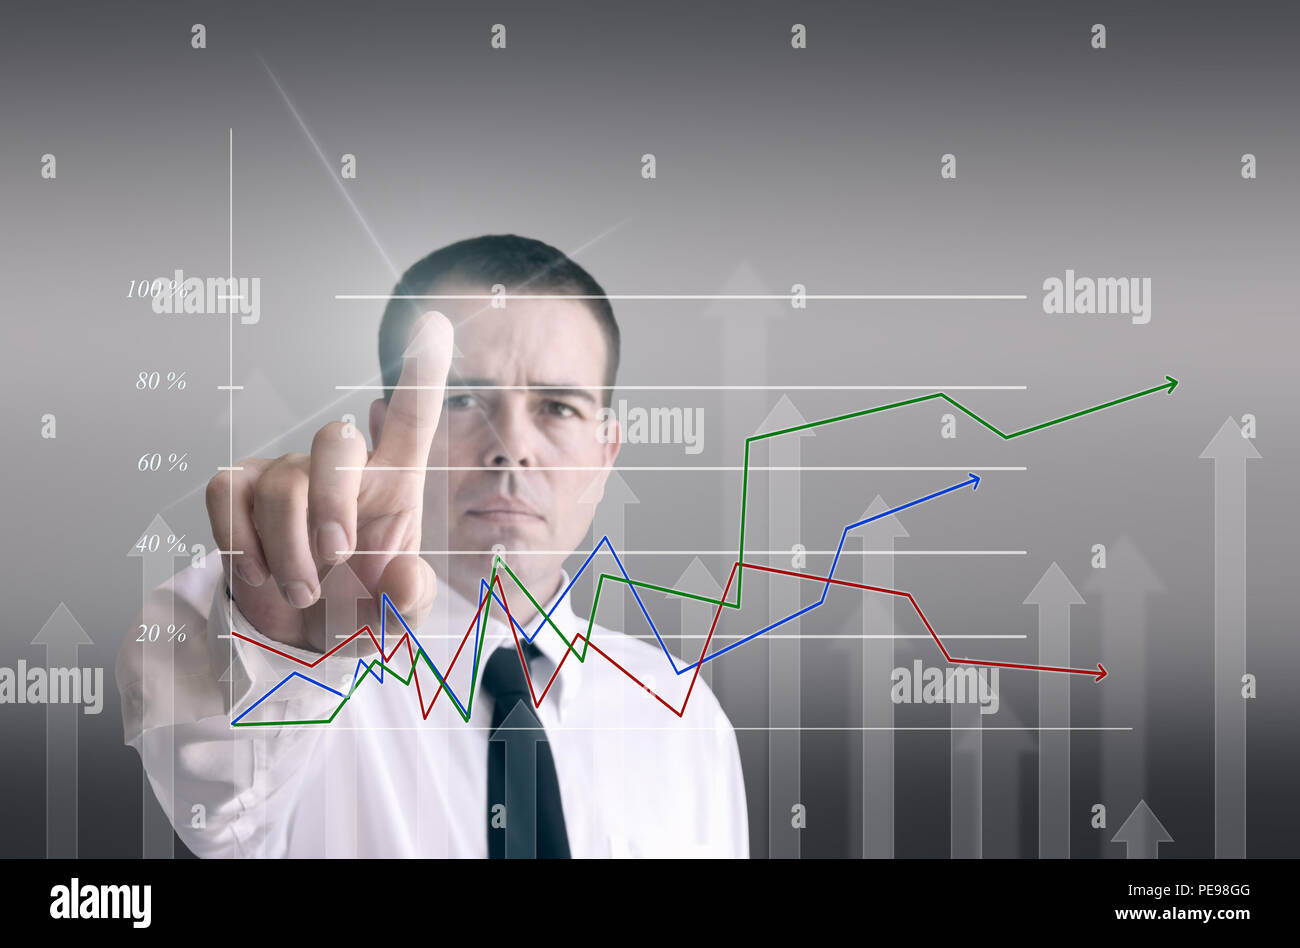 Estadísticas pantalla táctil / Statistics touchscreen Stock Photo